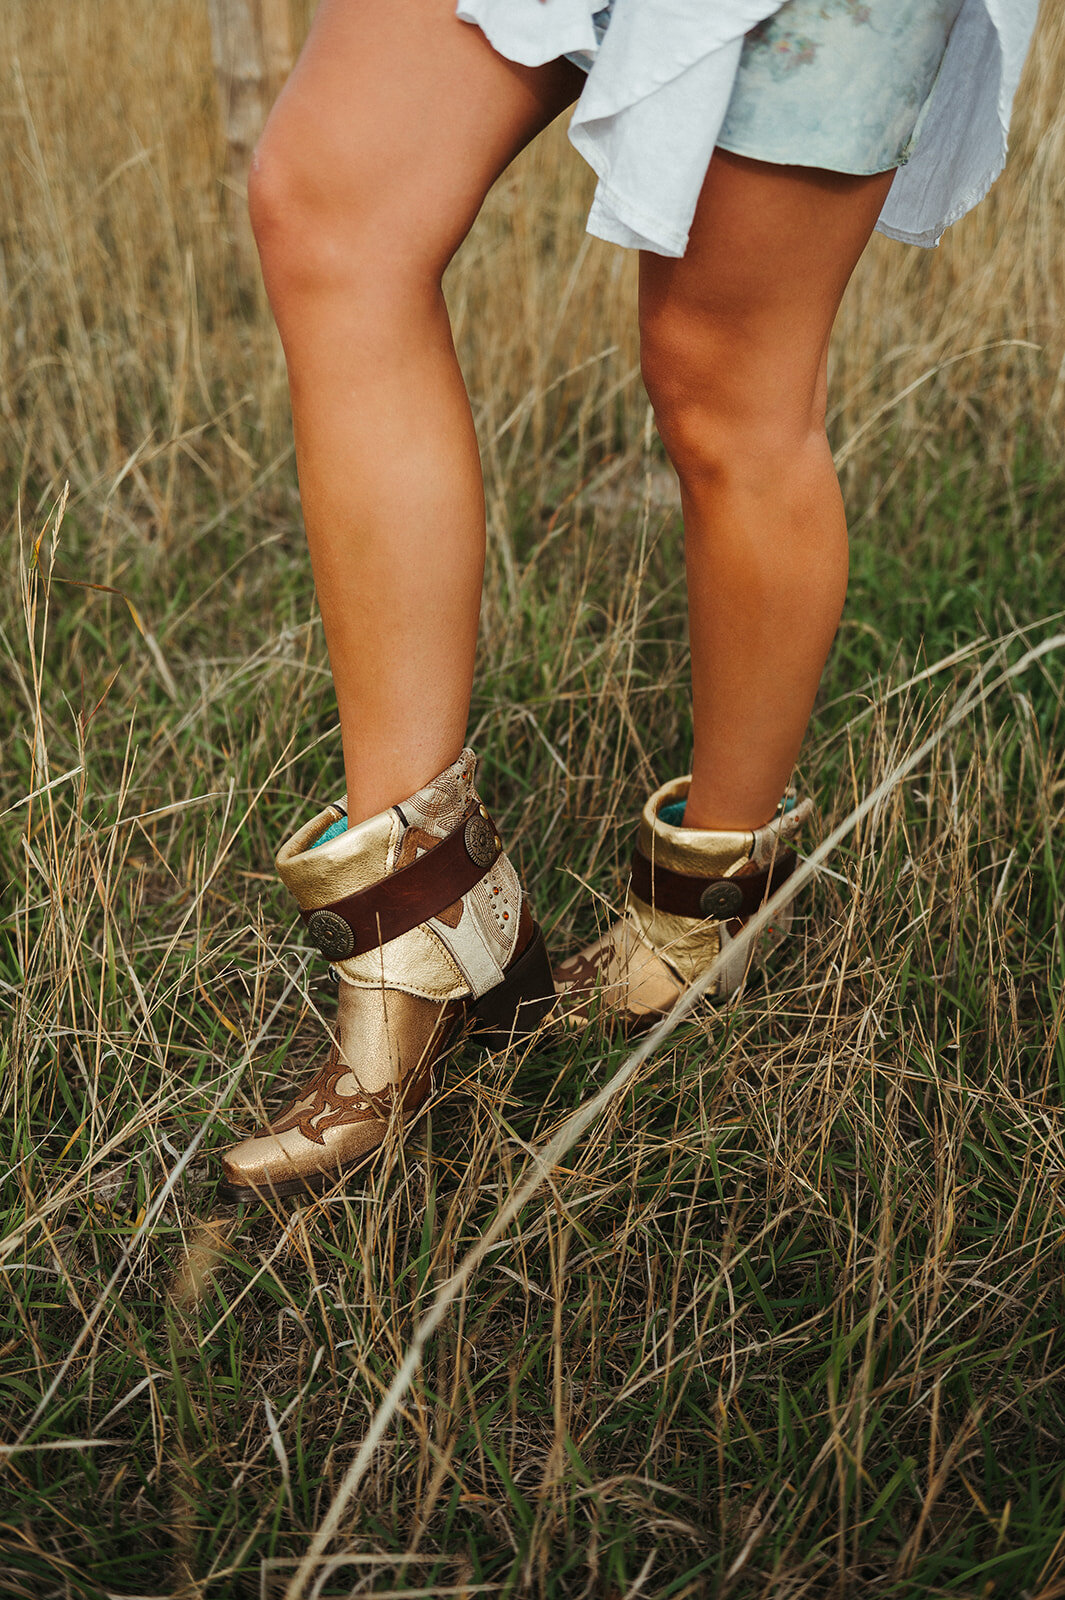 presley-gray-photo-montana-canty-boots-5195